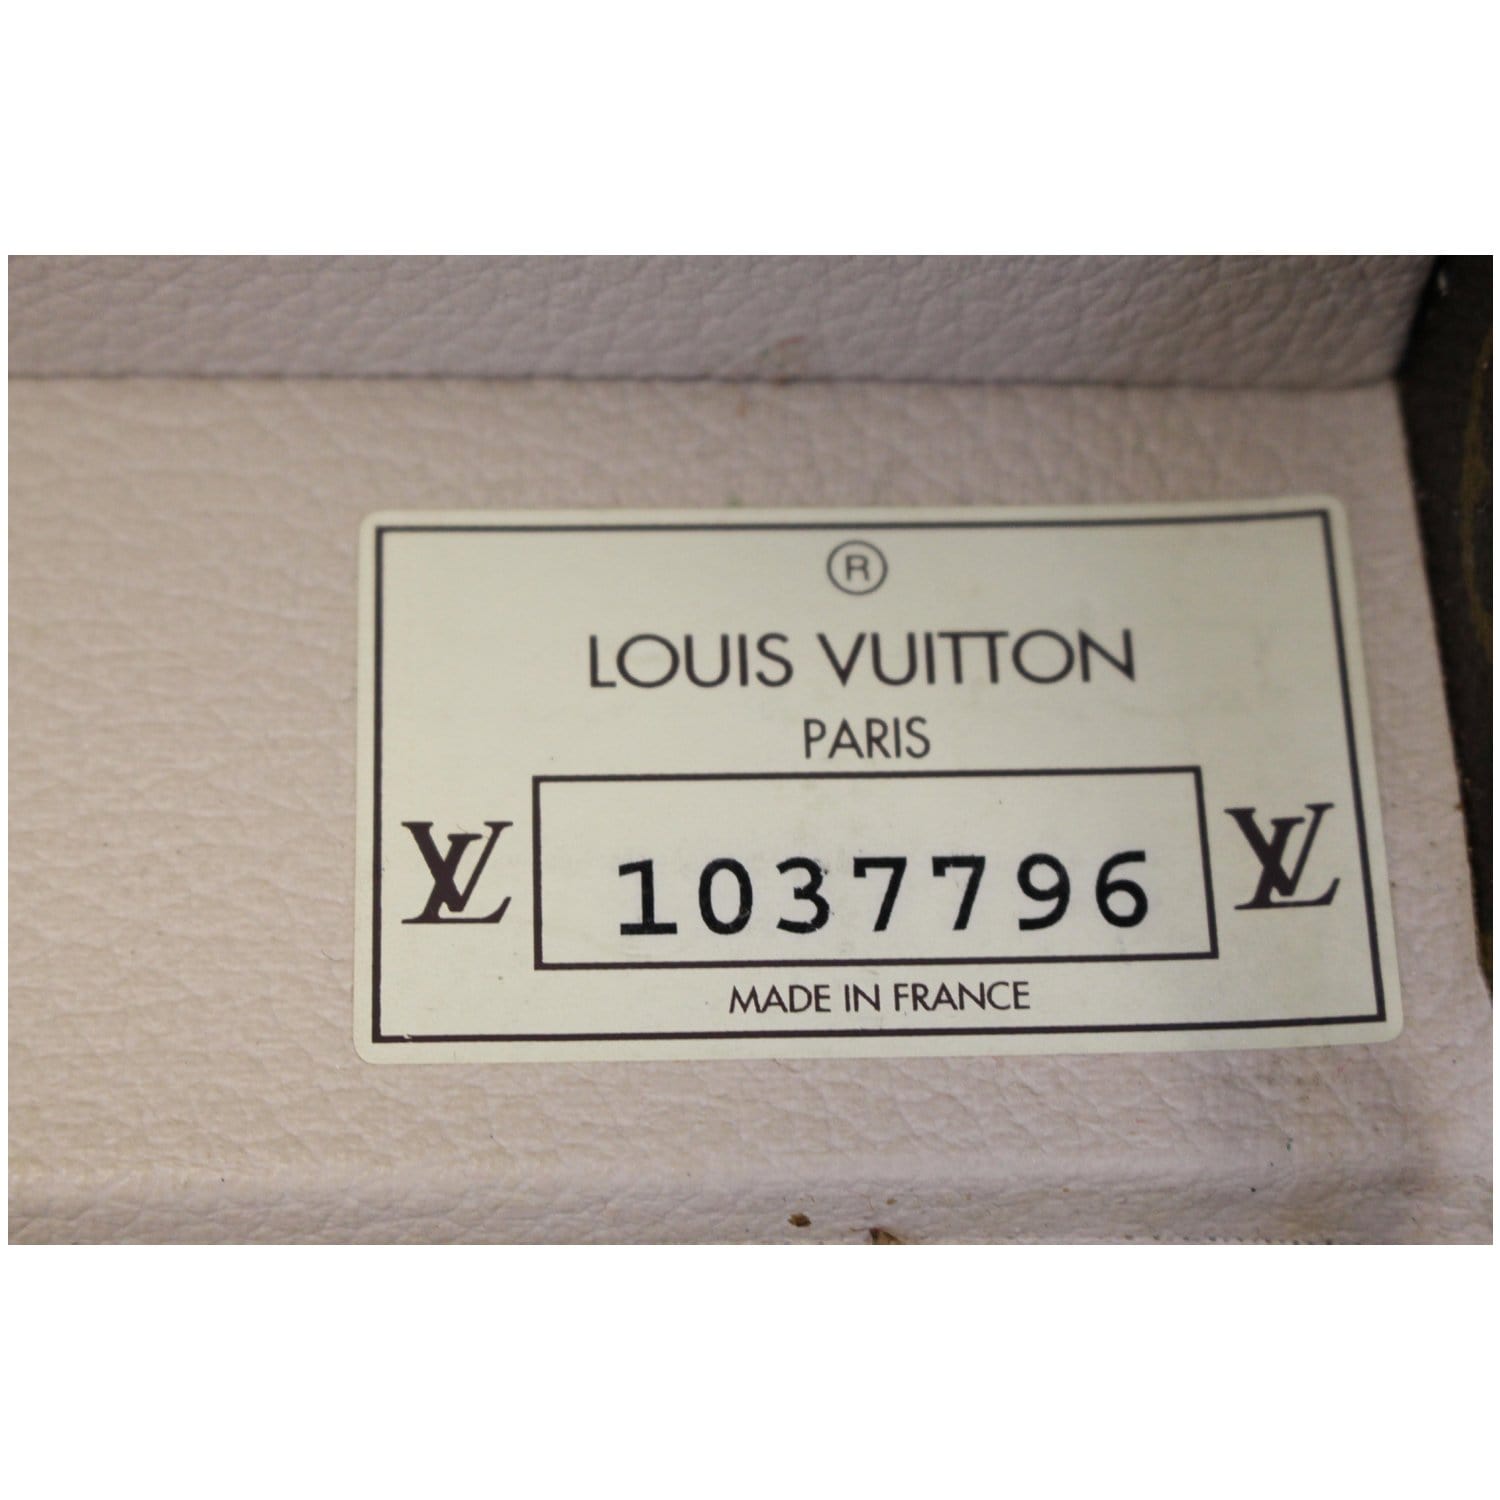 Louis vuitton boite Pharmacie ( Make up case) #louisvuitton #fyp